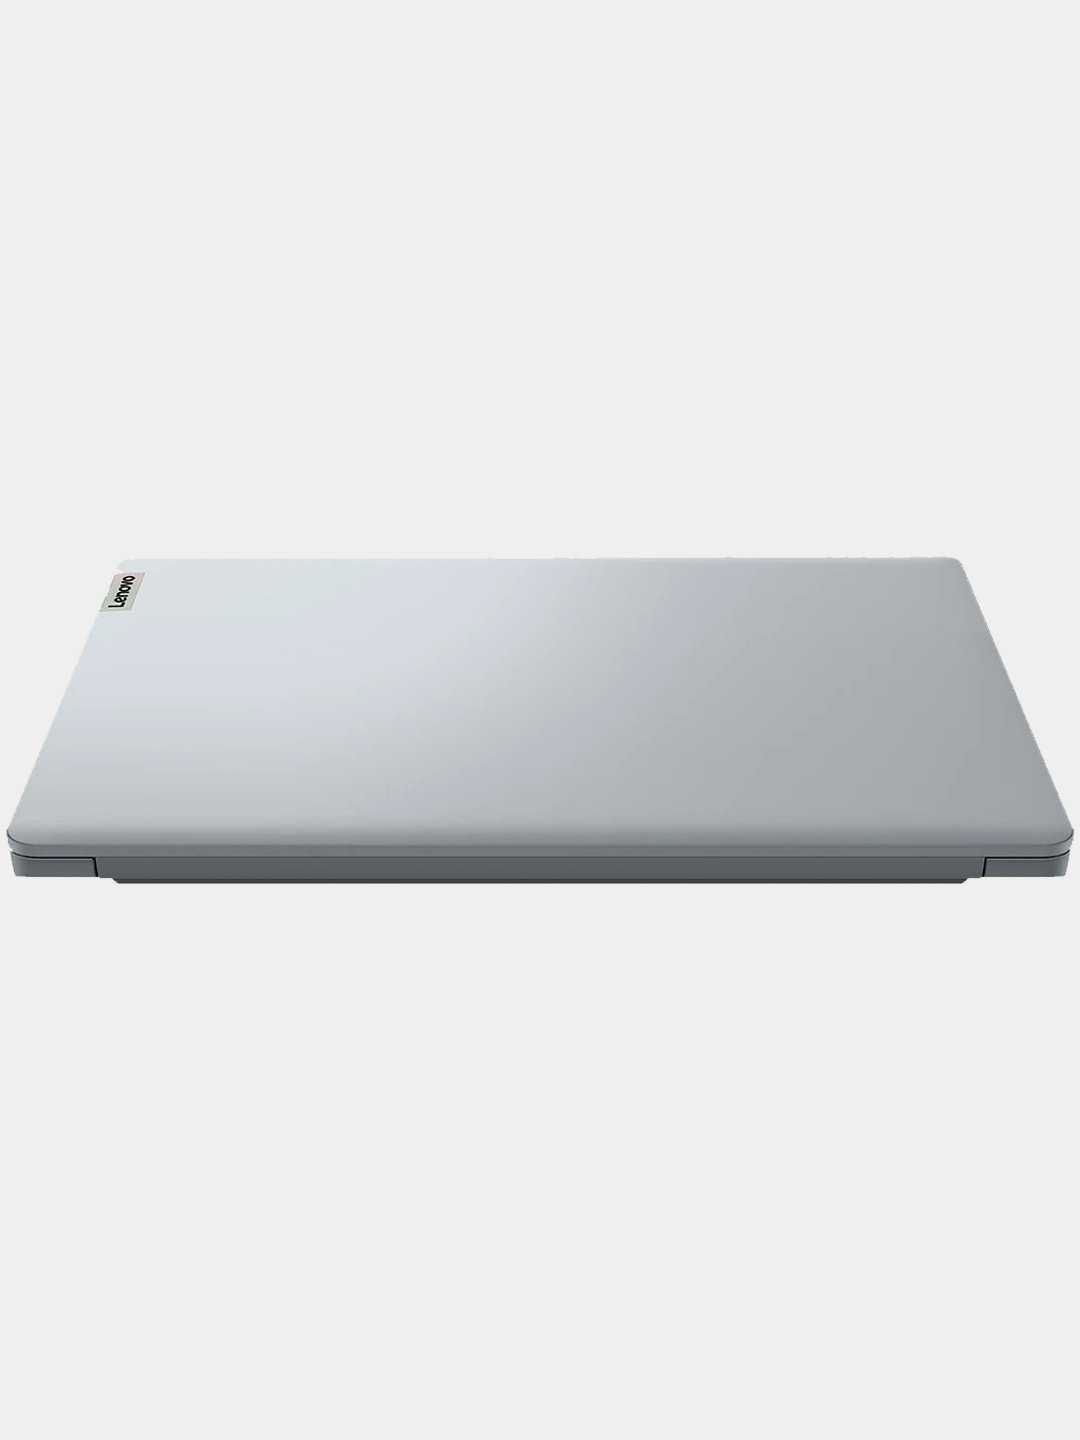 Ноутбук Lenovo Ideapad 1 N4020 4Gb DDR4/256Gb SSD/15.6 HD ОПТОВАЯ ЦЕНА